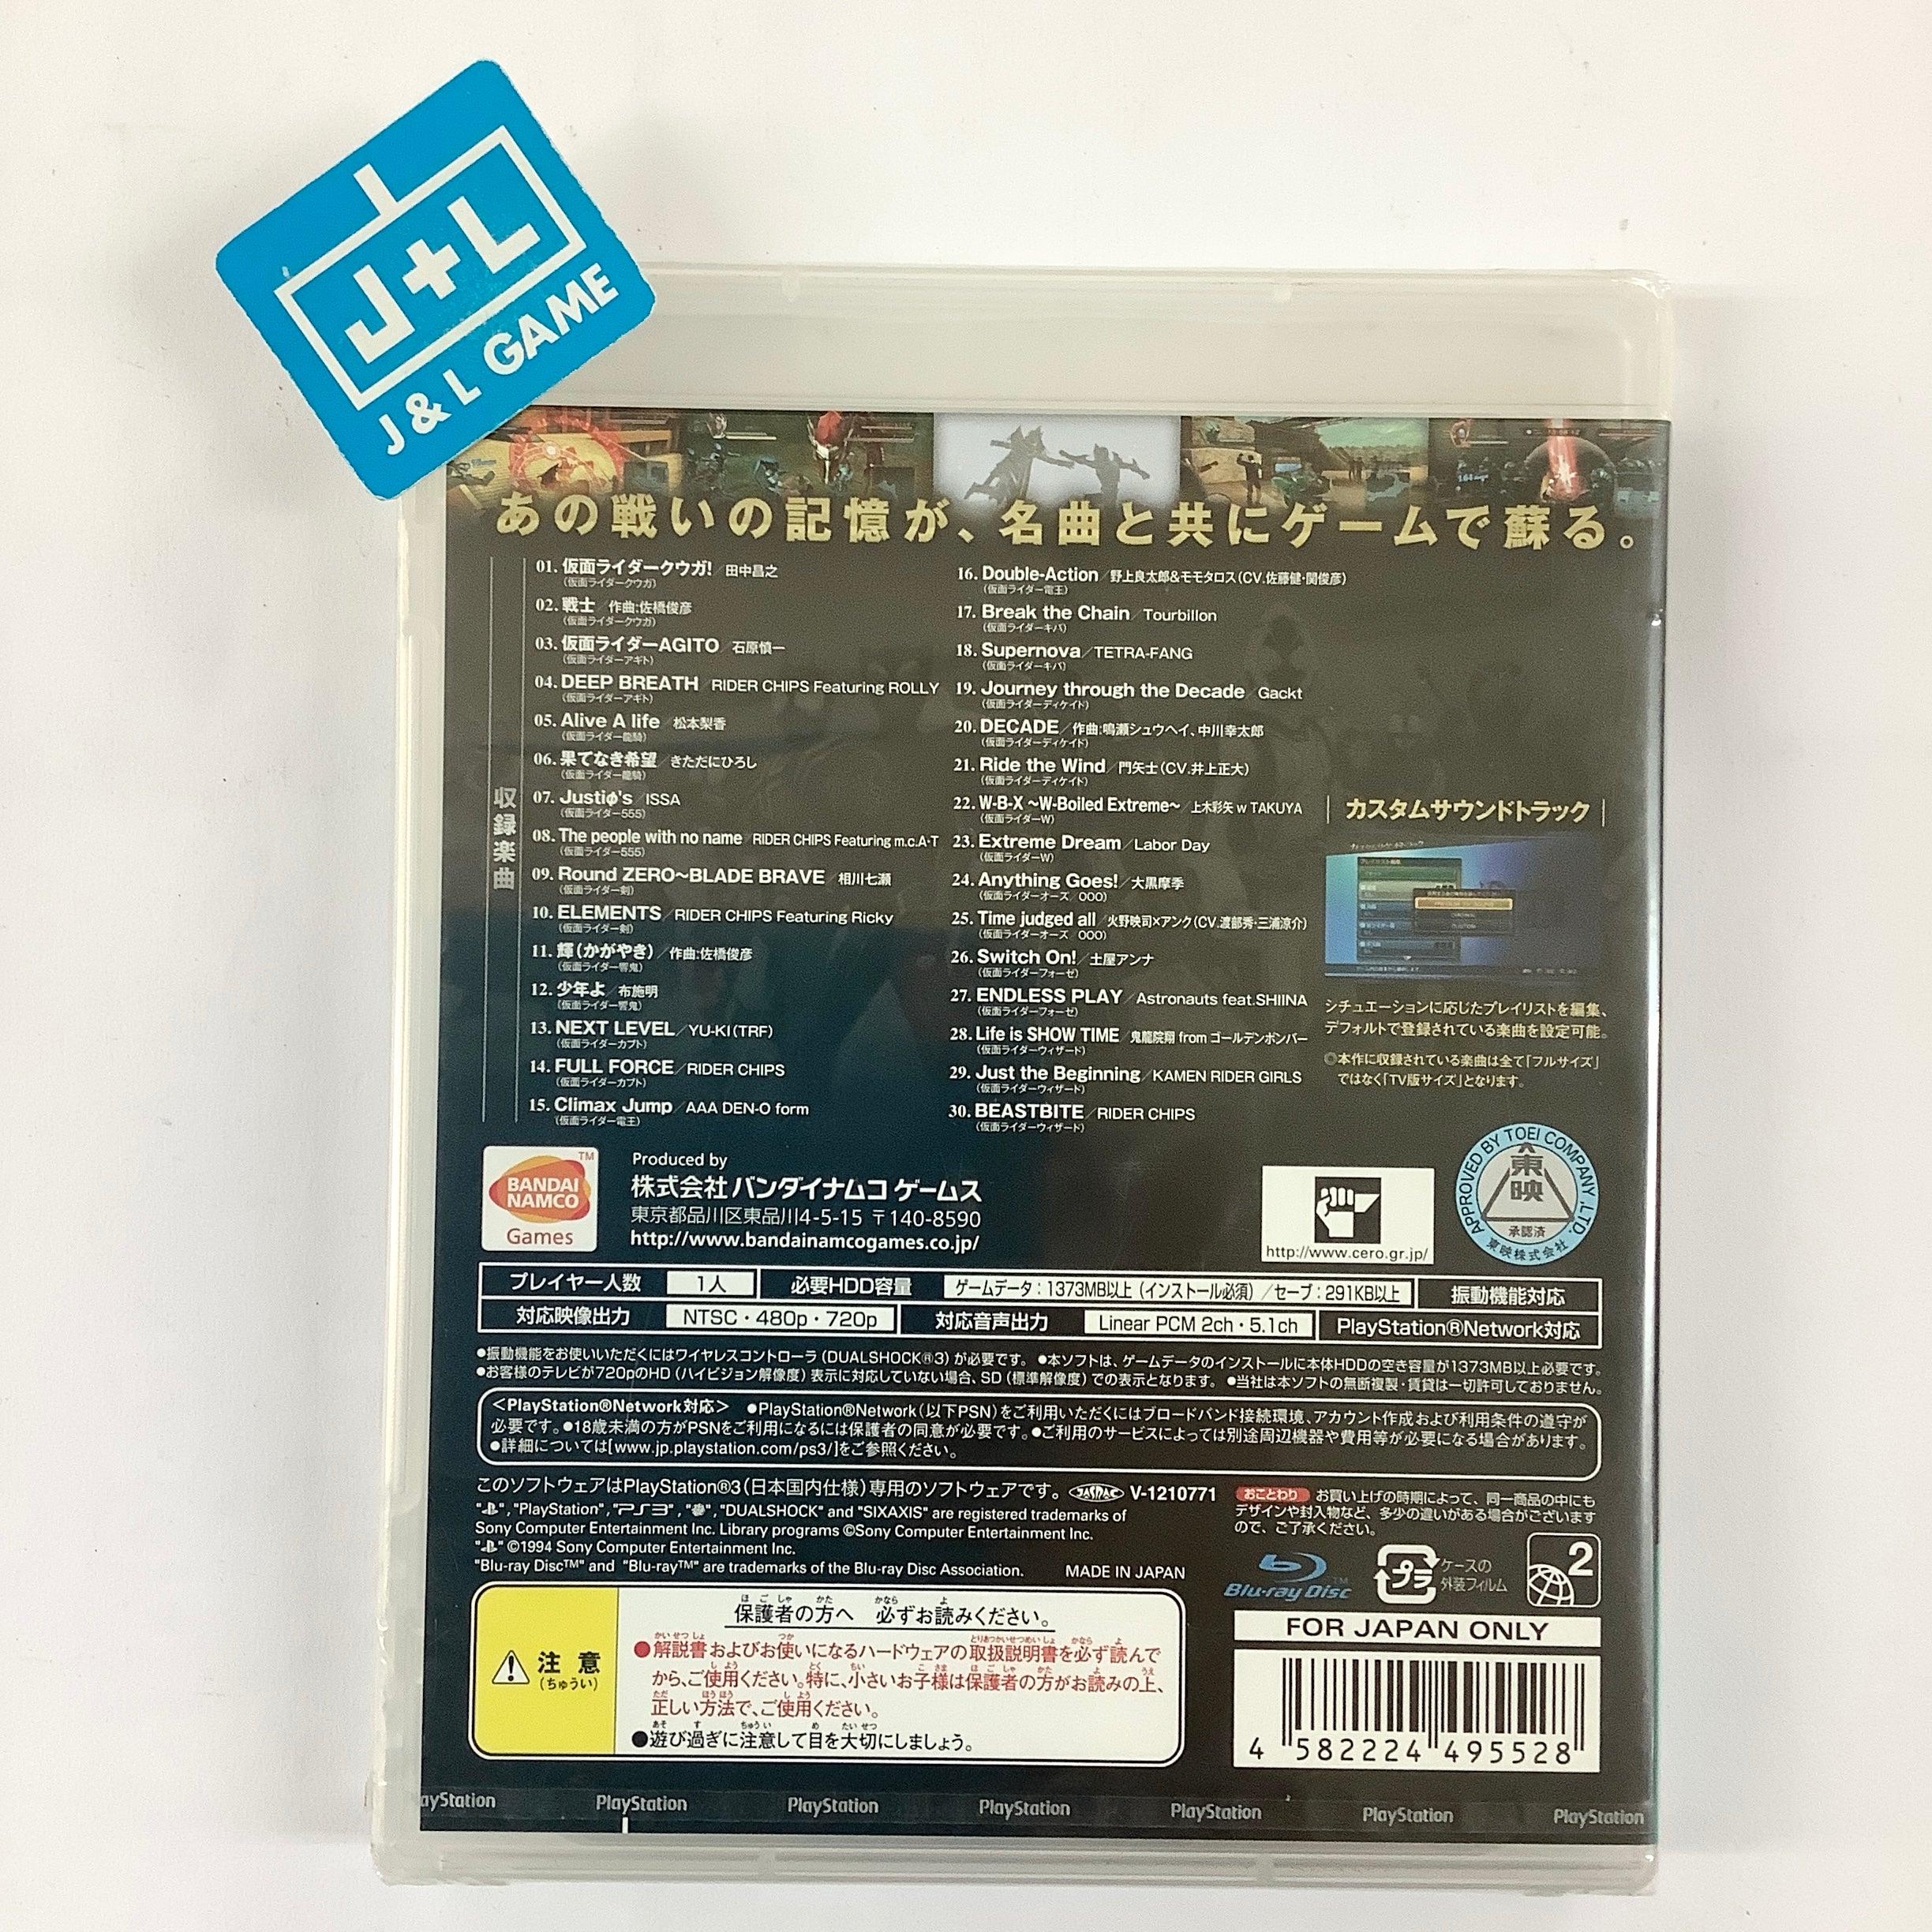 Kamen Rider: Battride War (Premium TV Sound Edition) - (PS3) PlayStation 3 (Japanese Import) Video Games Bandai Namco Games   